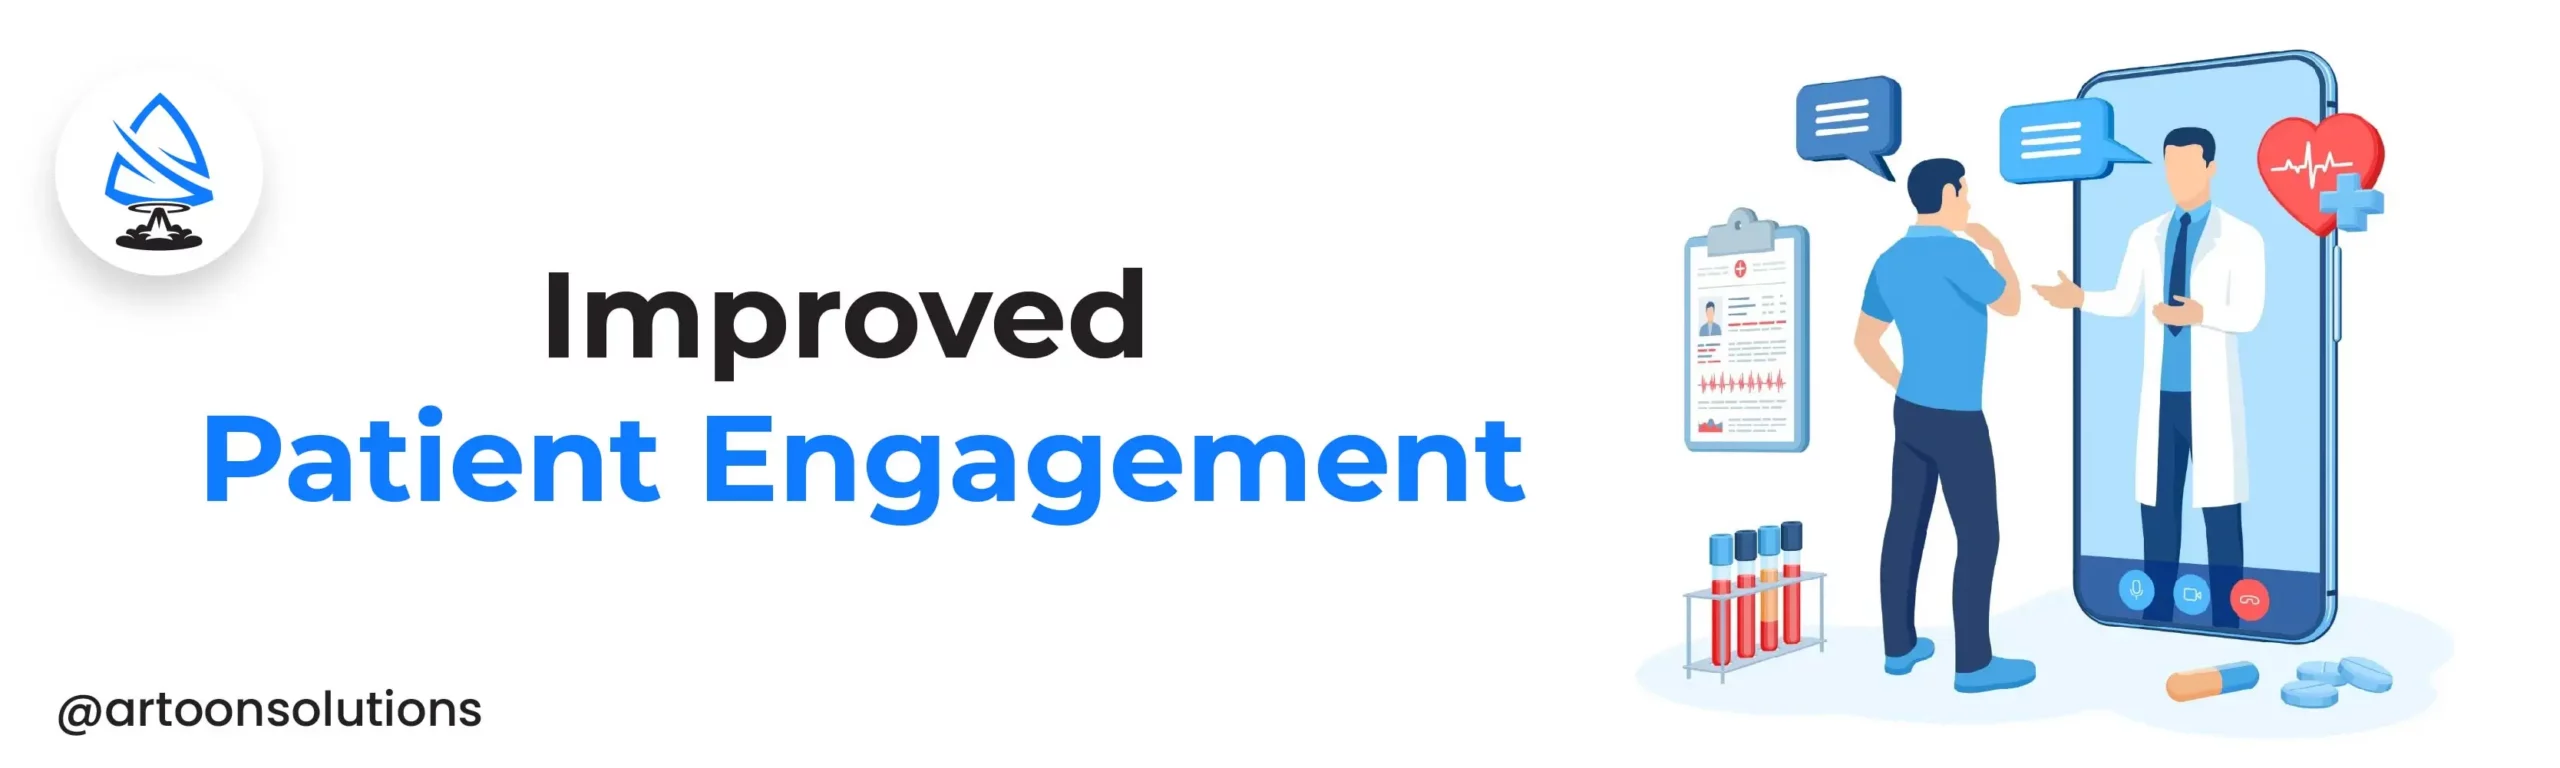 Improved Patient Engagement